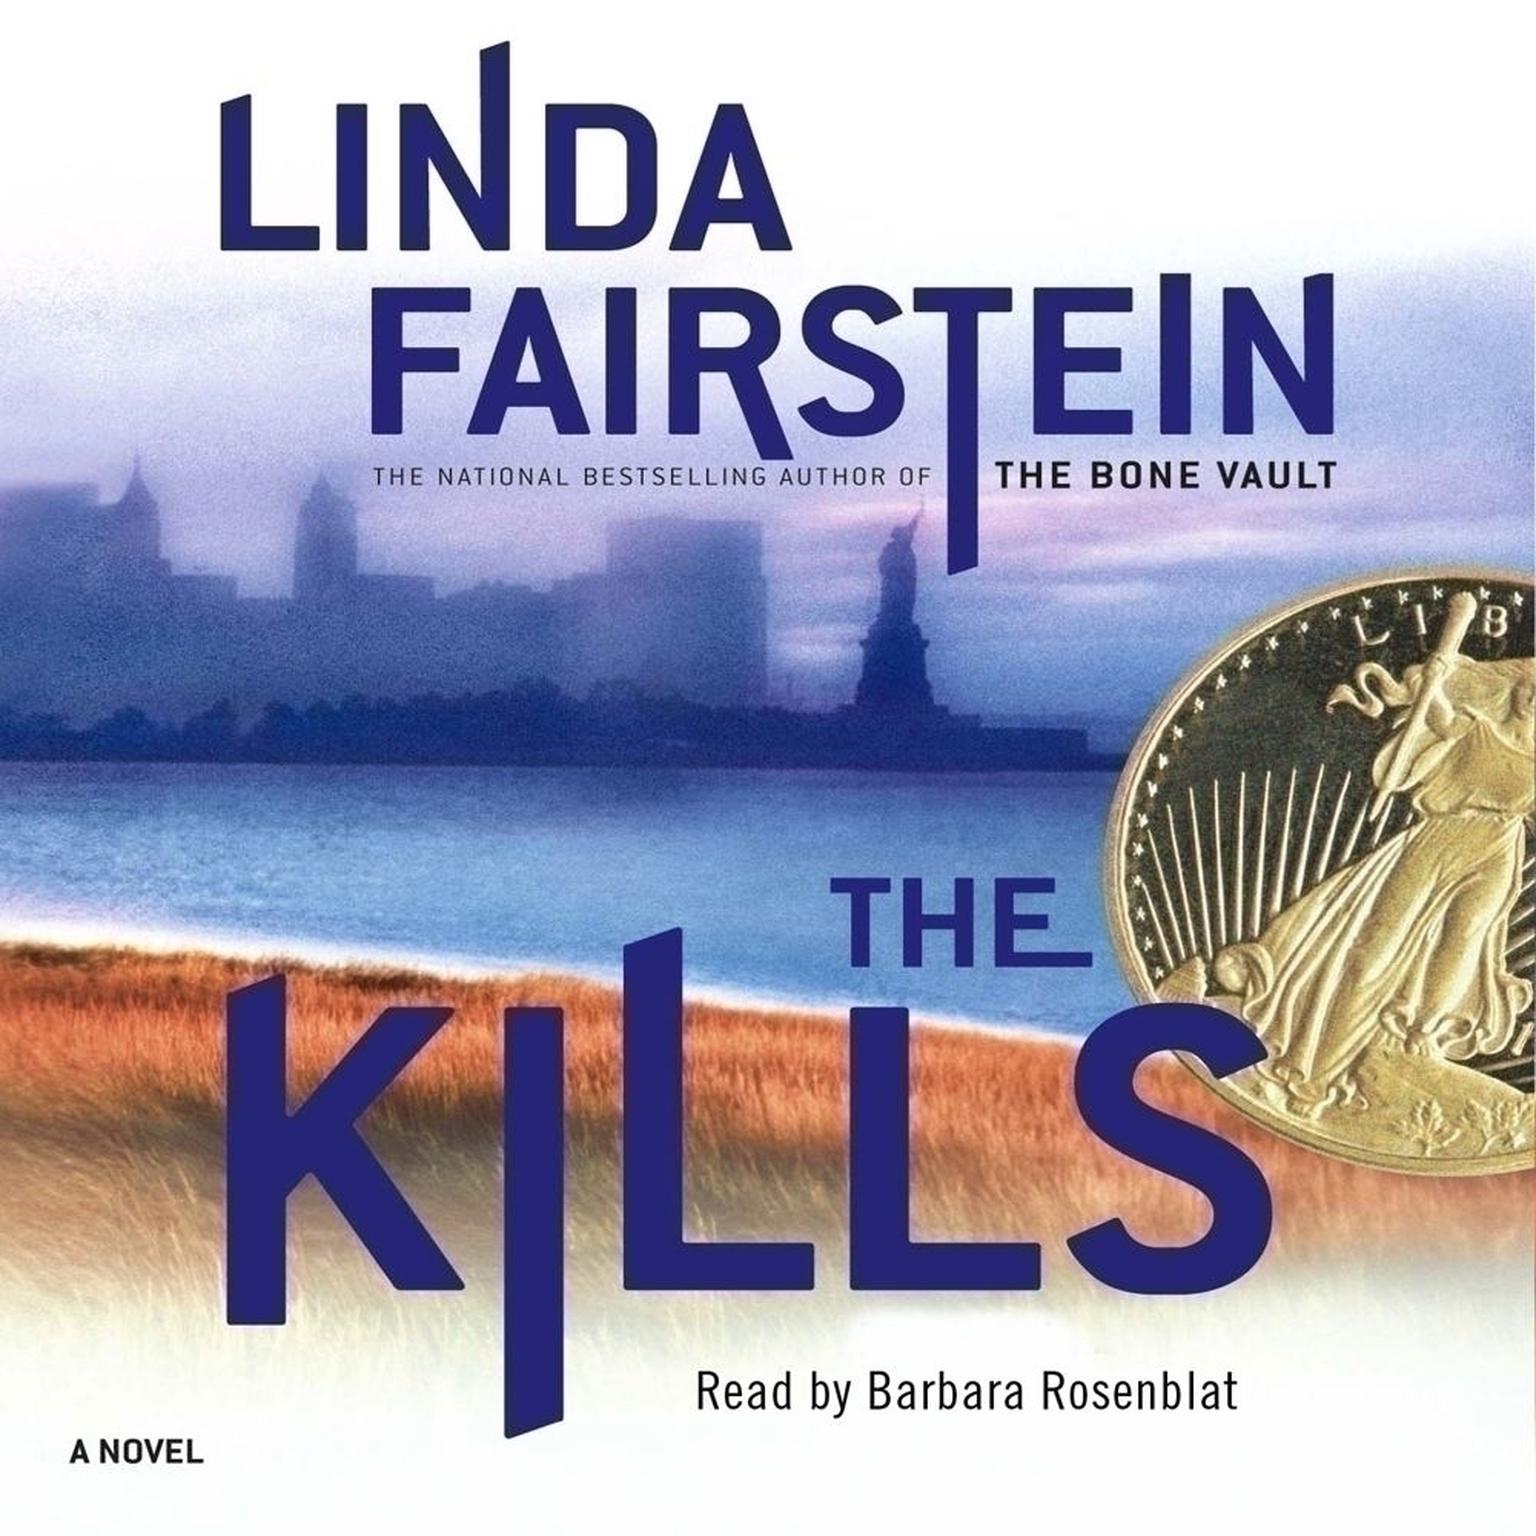 The Kills Audiobook, by Linda Fairstein